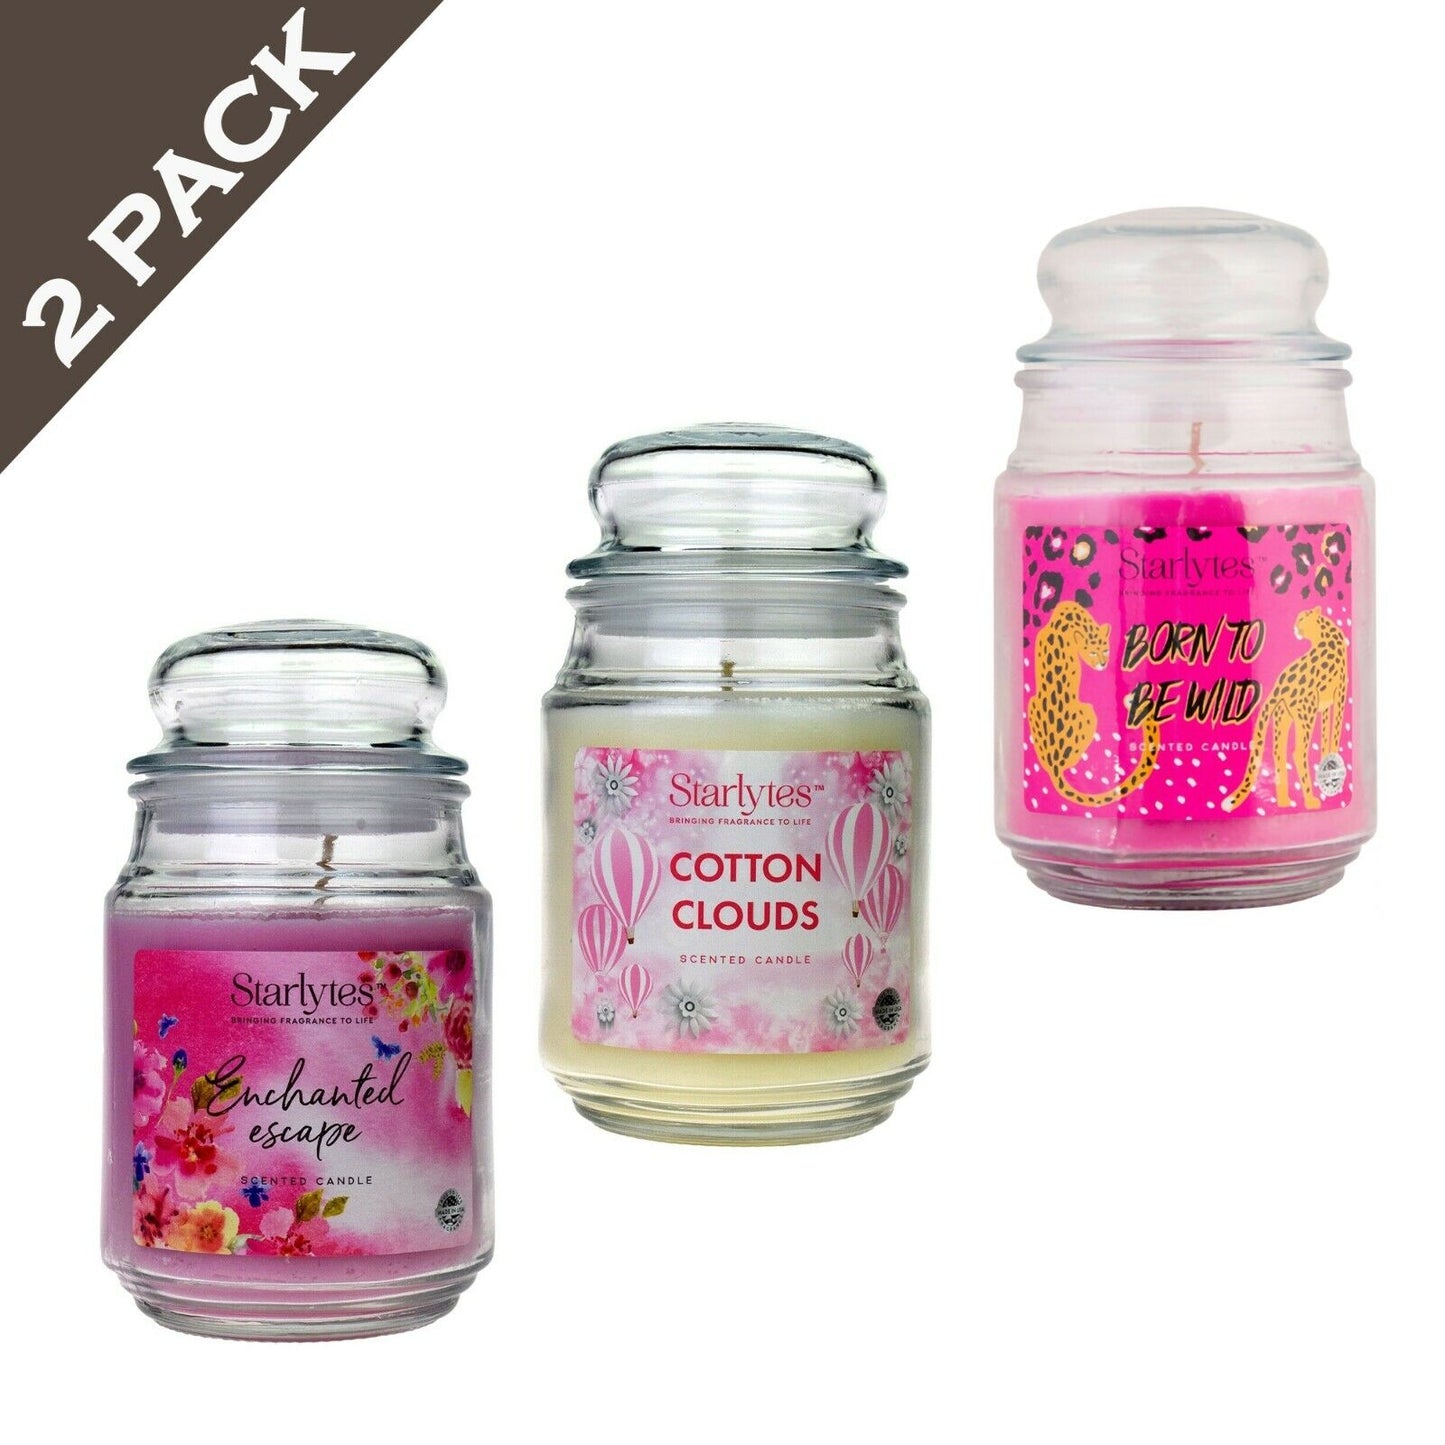 2 x Starlytes Scented Fragrance Candles Glass Jar 510g 125Hr Burn Time Gift Set